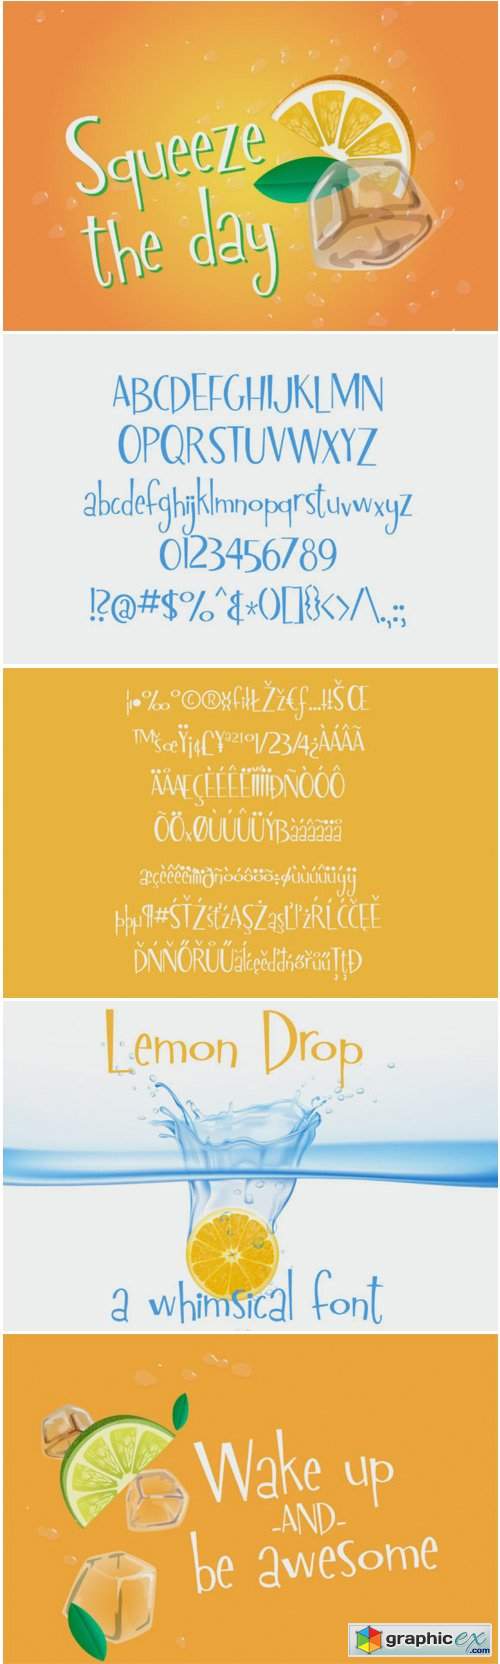 Lemon Drop Font